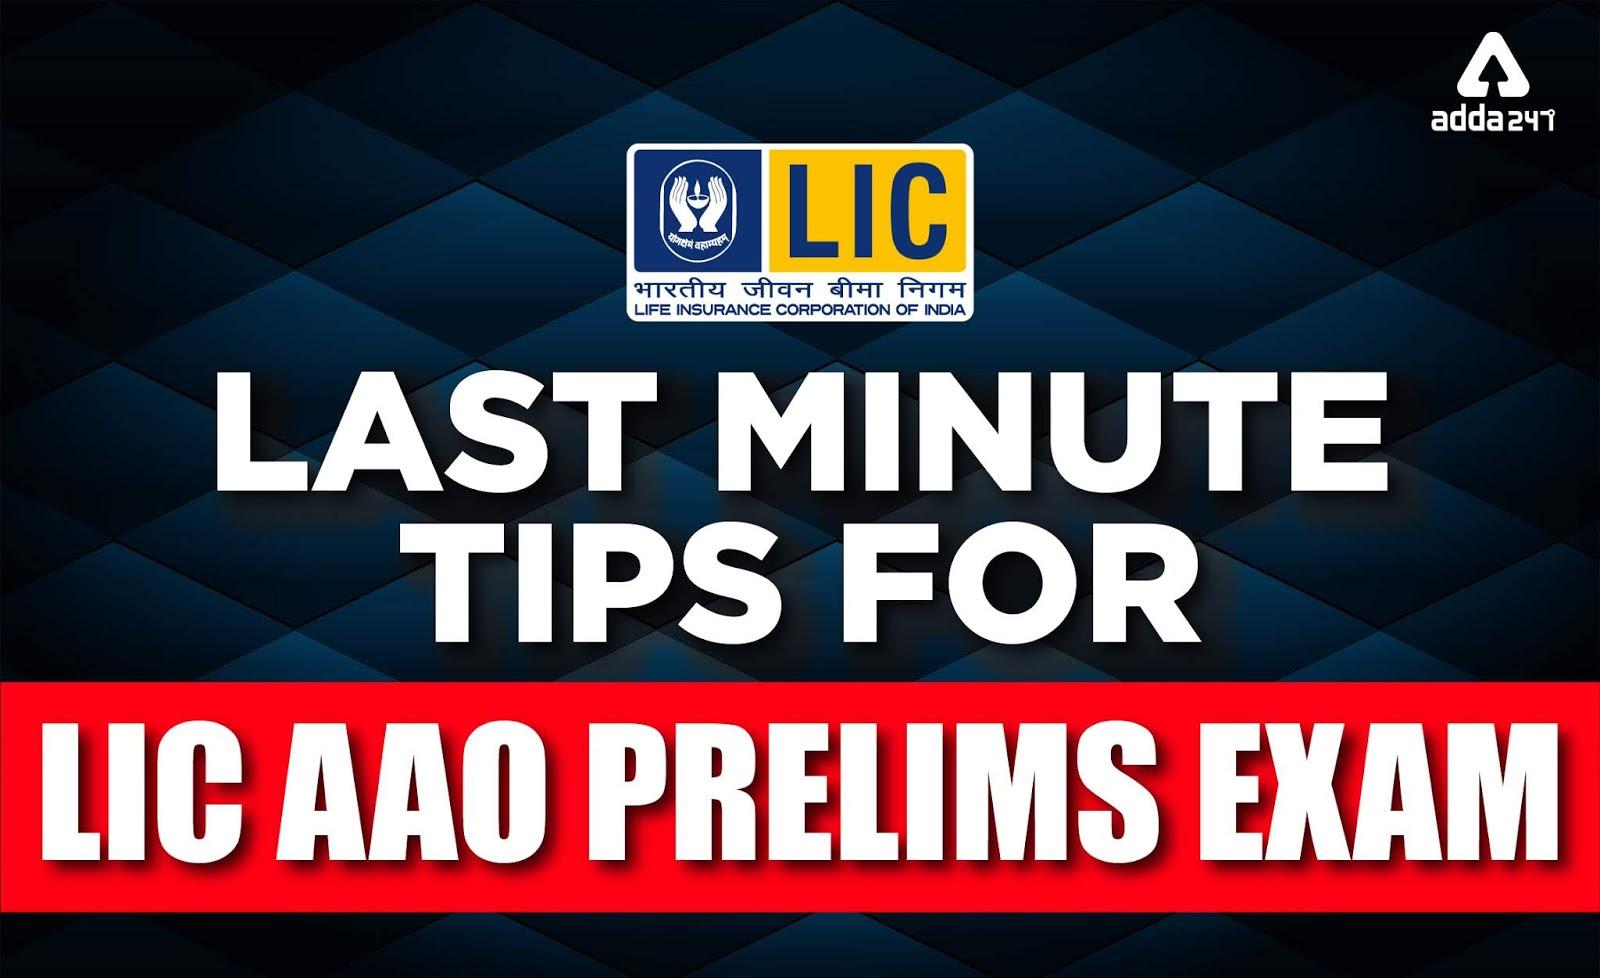 Last-Minute-Tips-For-LIC-AAO-Exam-2019